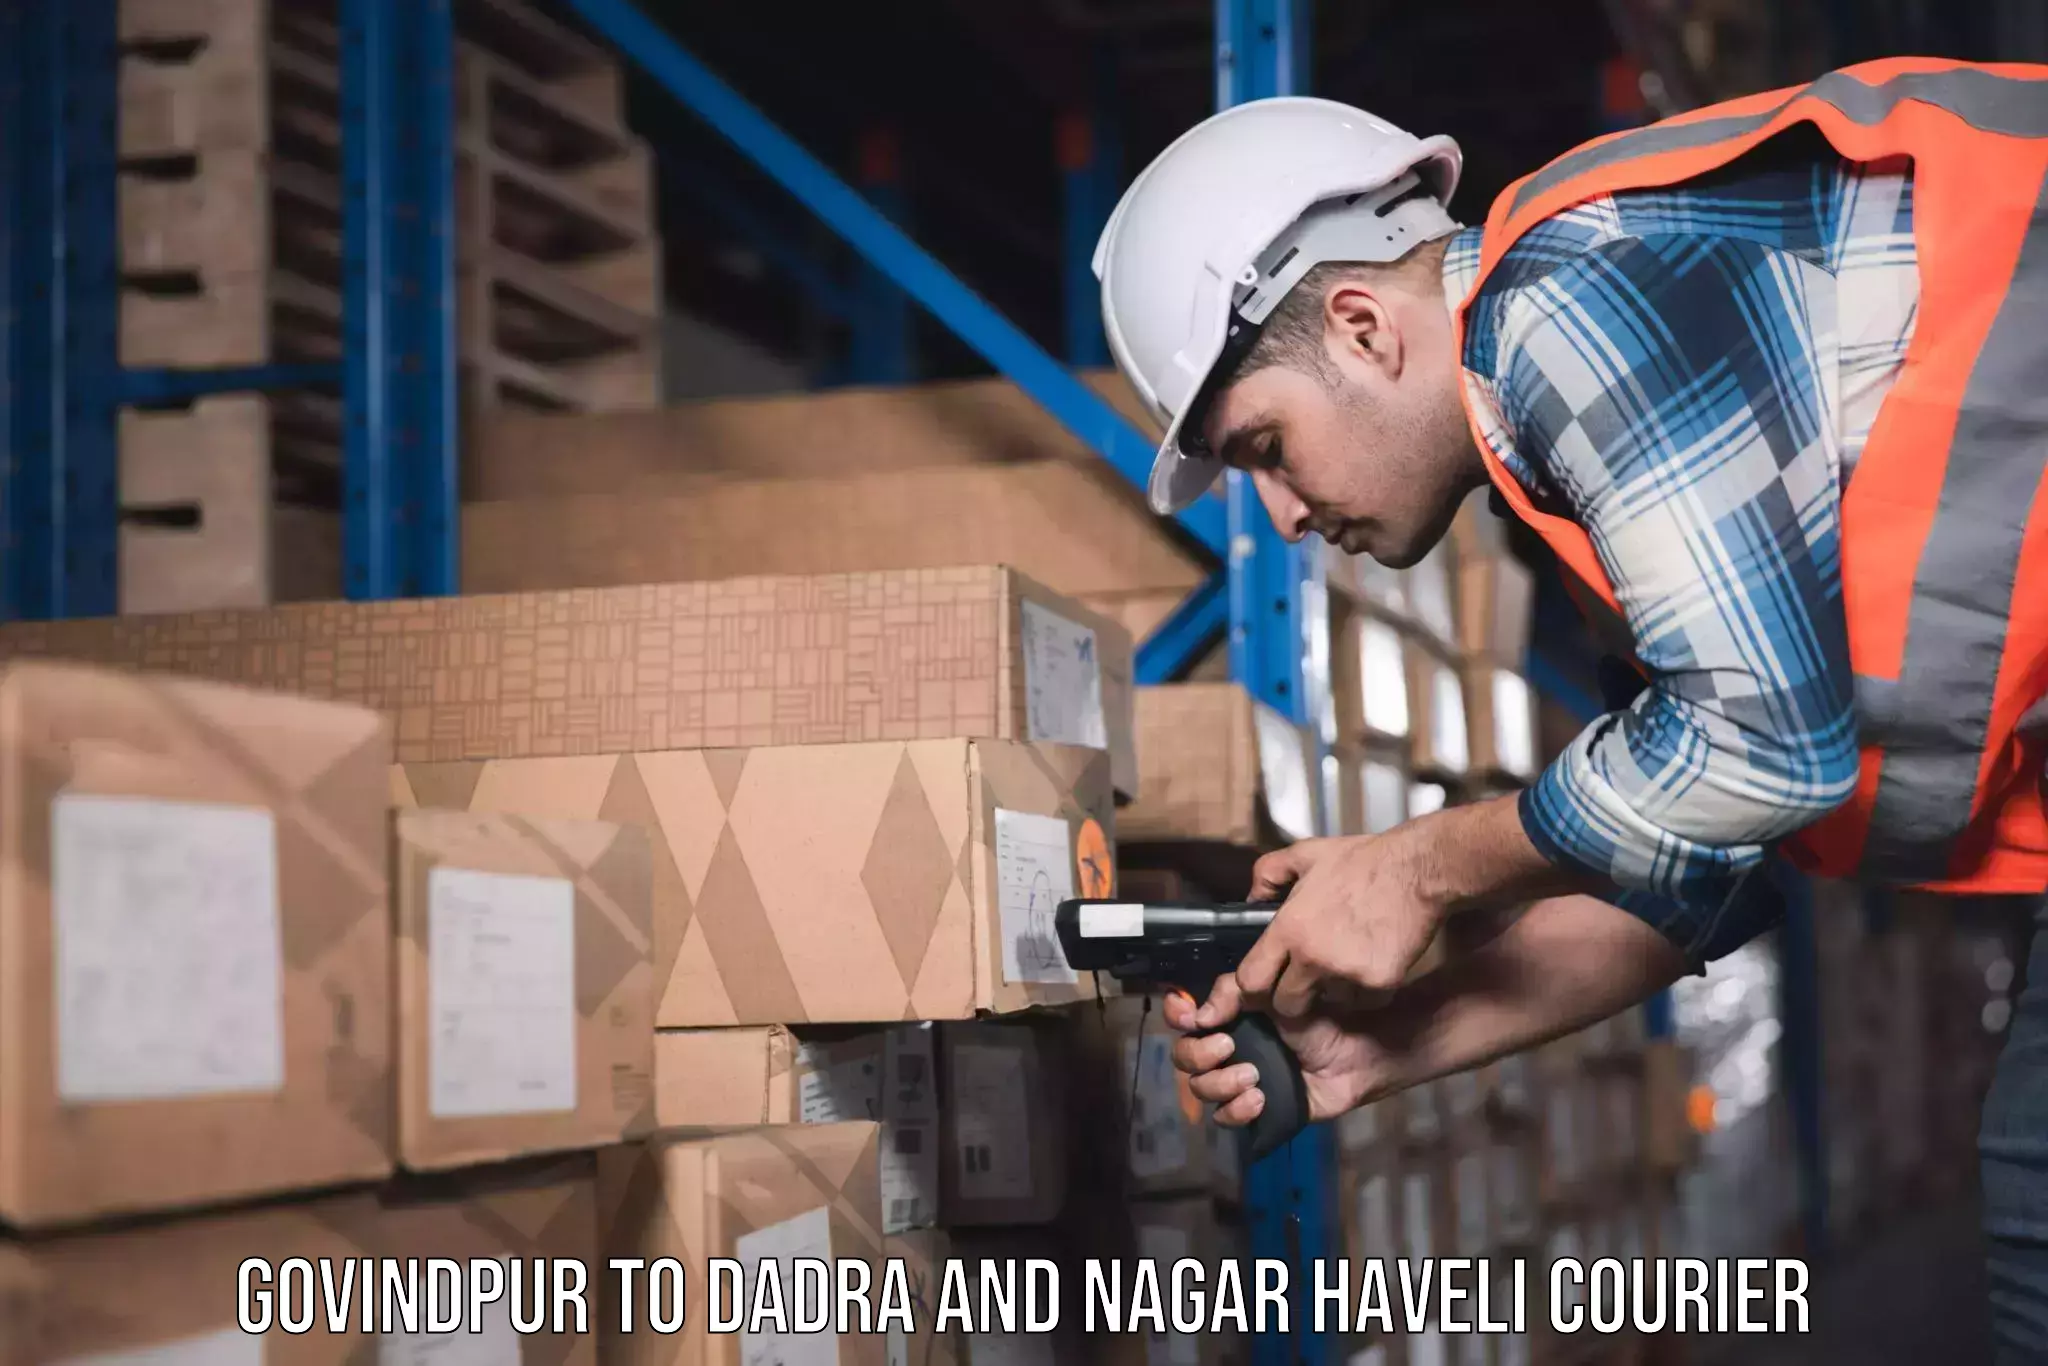 Furniture moving experts Govindpur to Dadra and Nagar Haveli